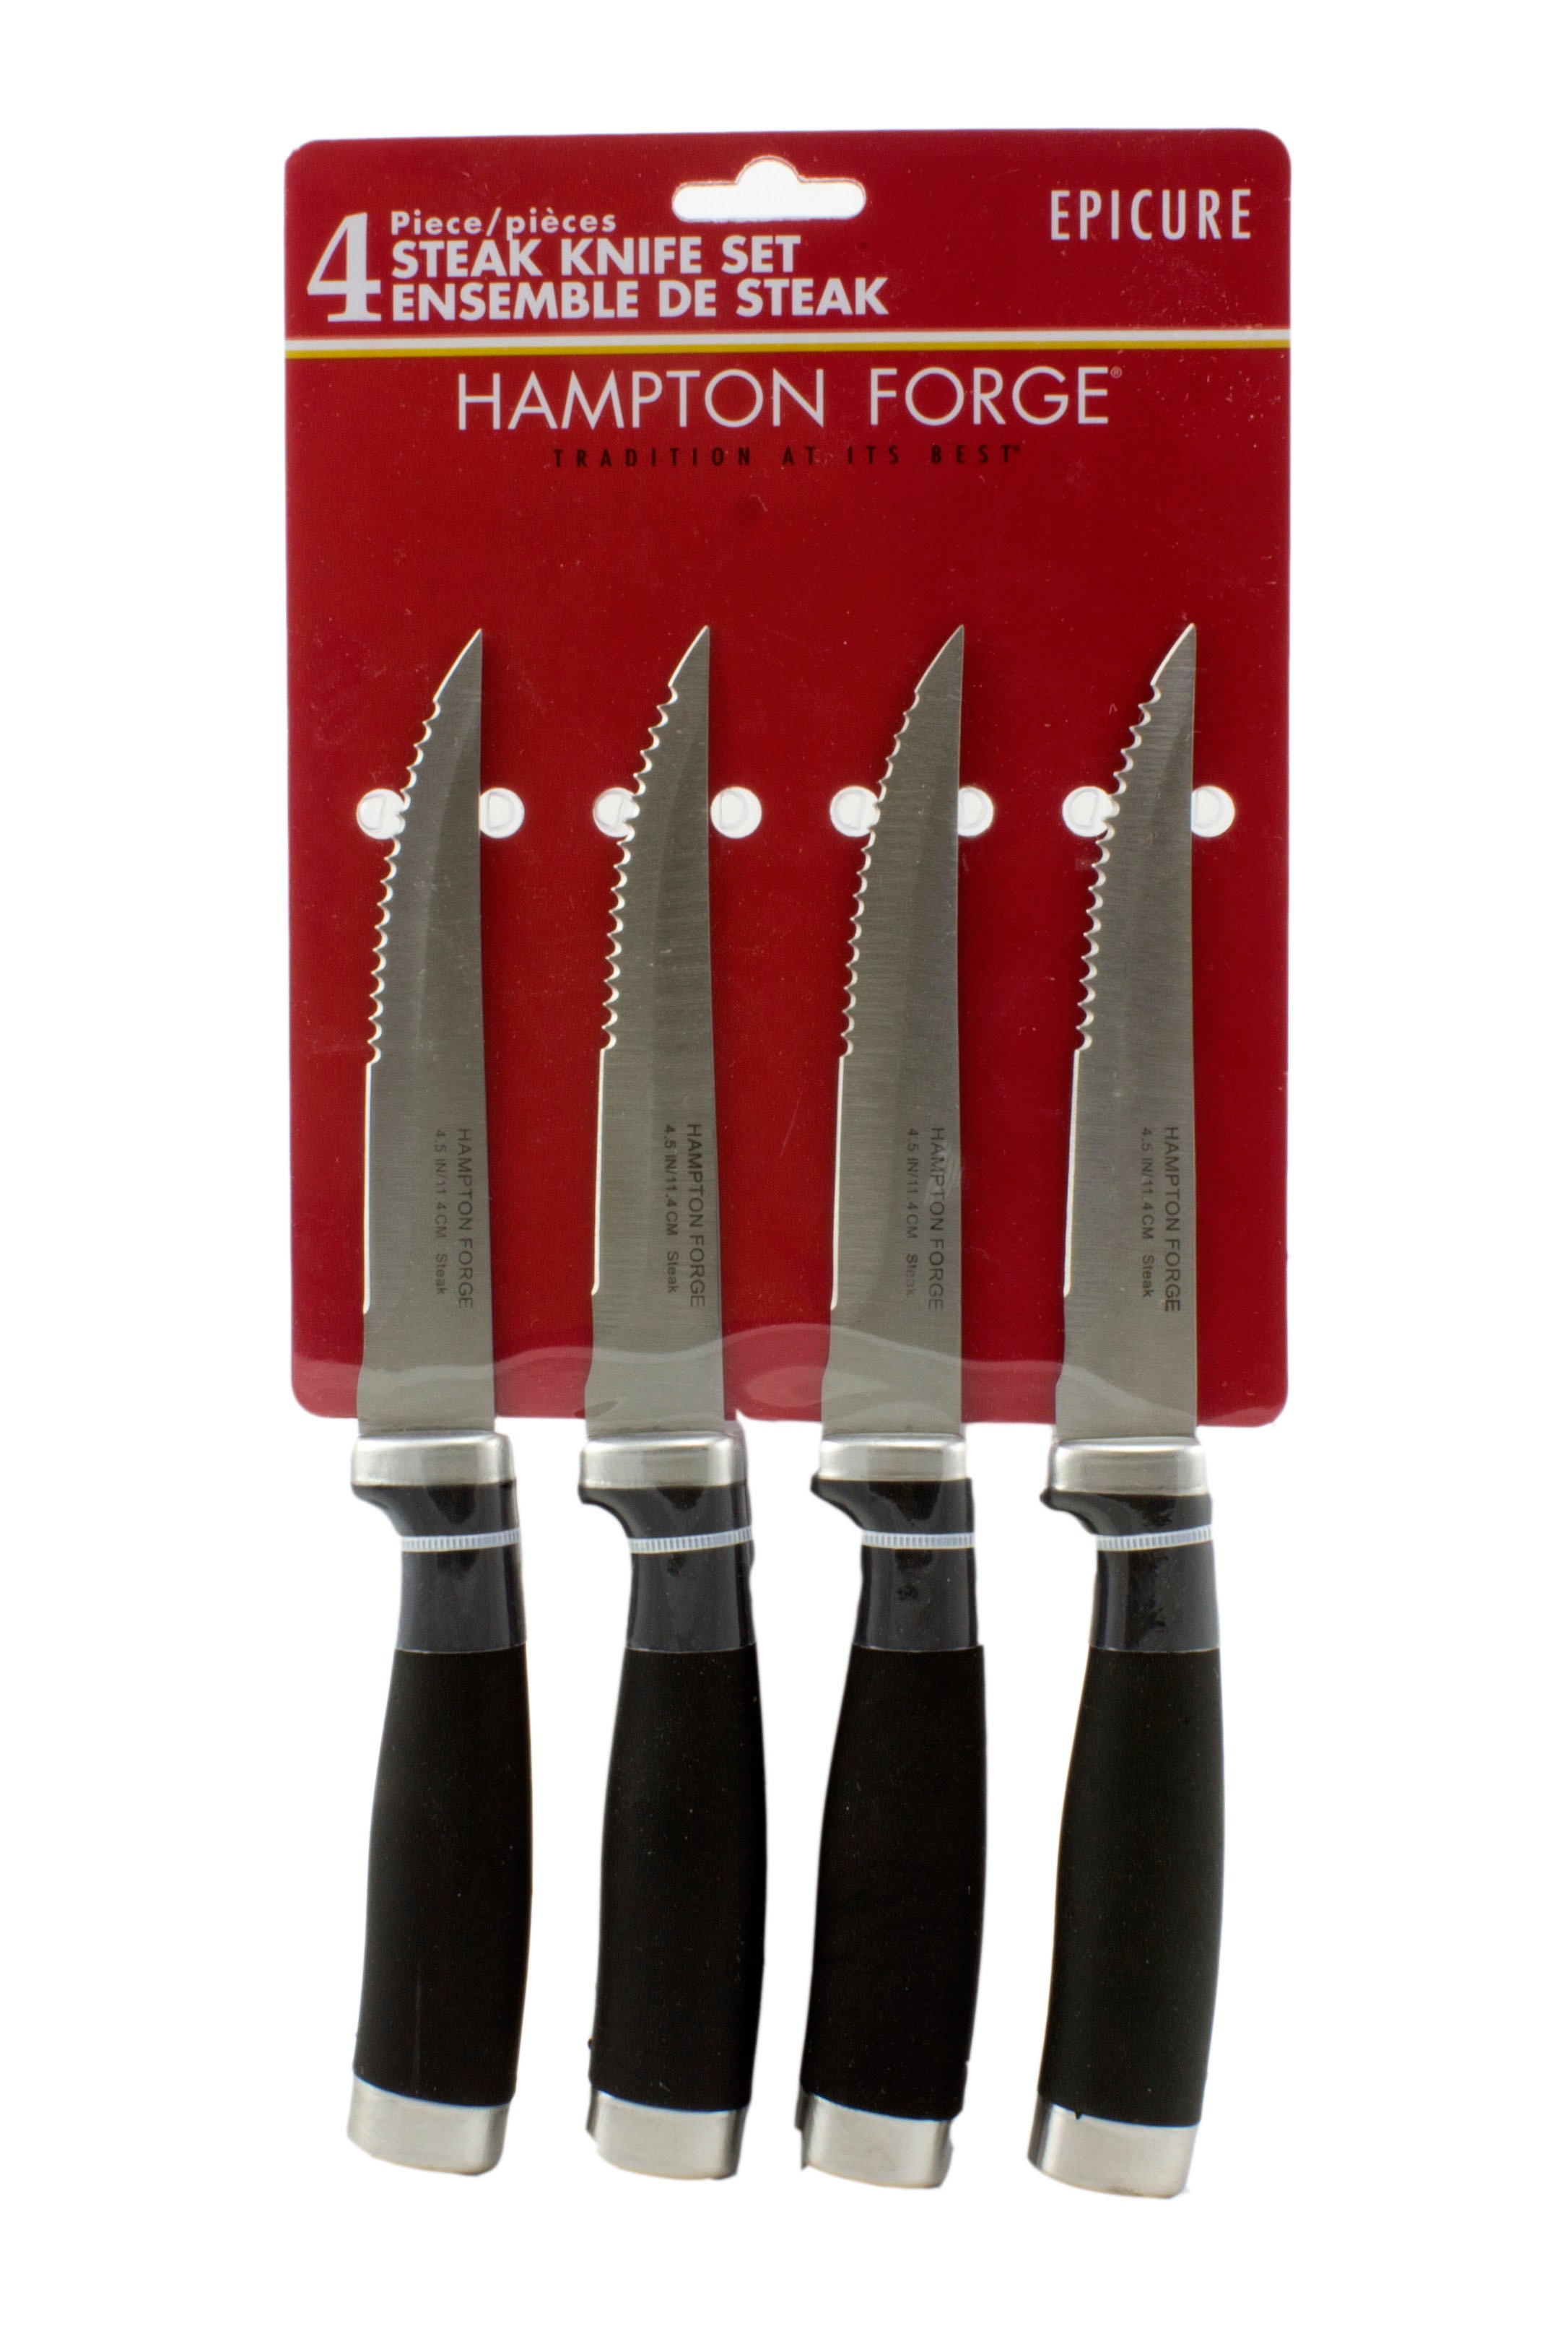 Hampton Forge Steak Set, Epicure, 4 Piece